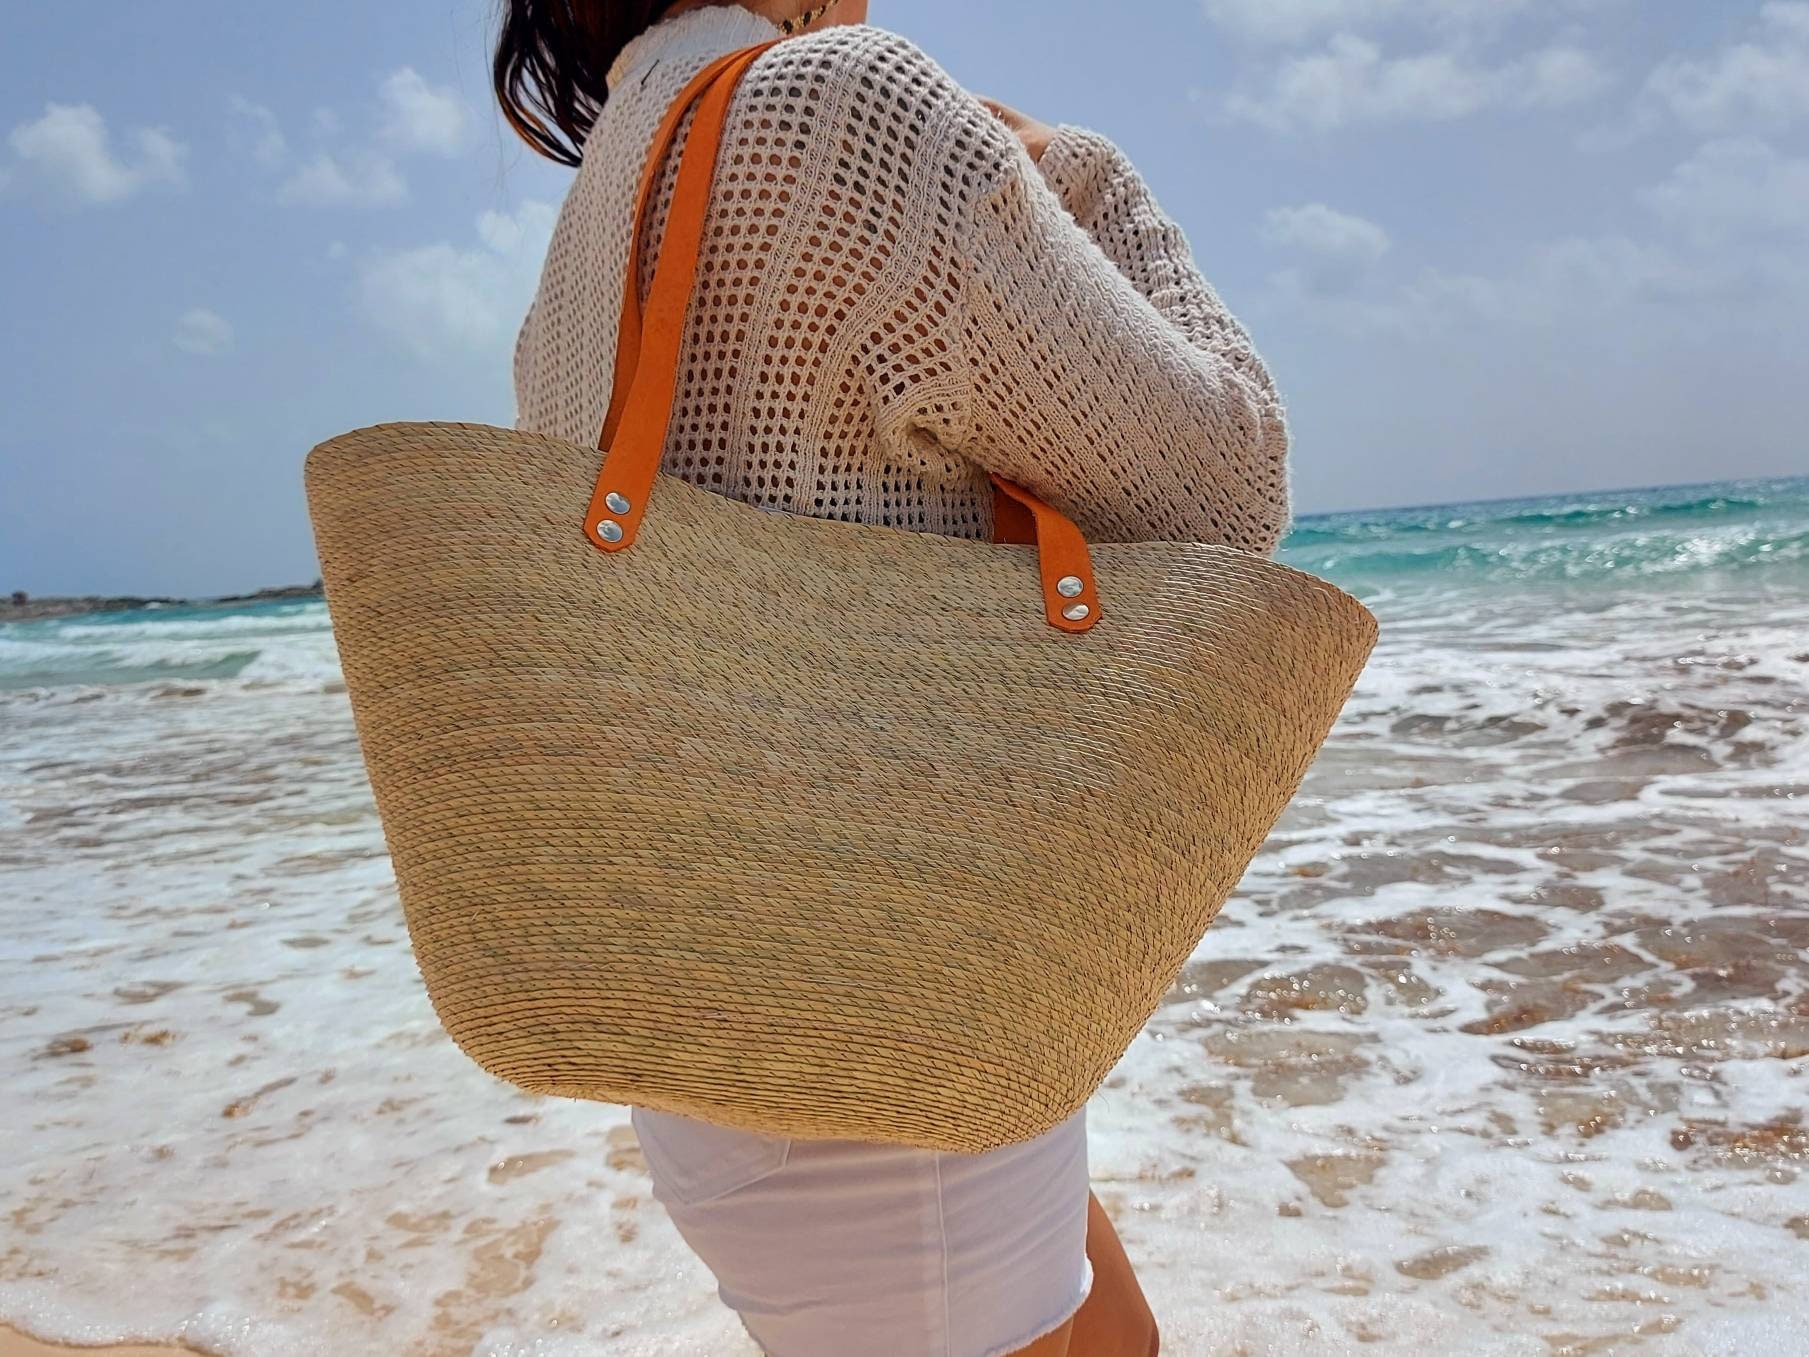 The Take Me to Italy Straw Beach Bag